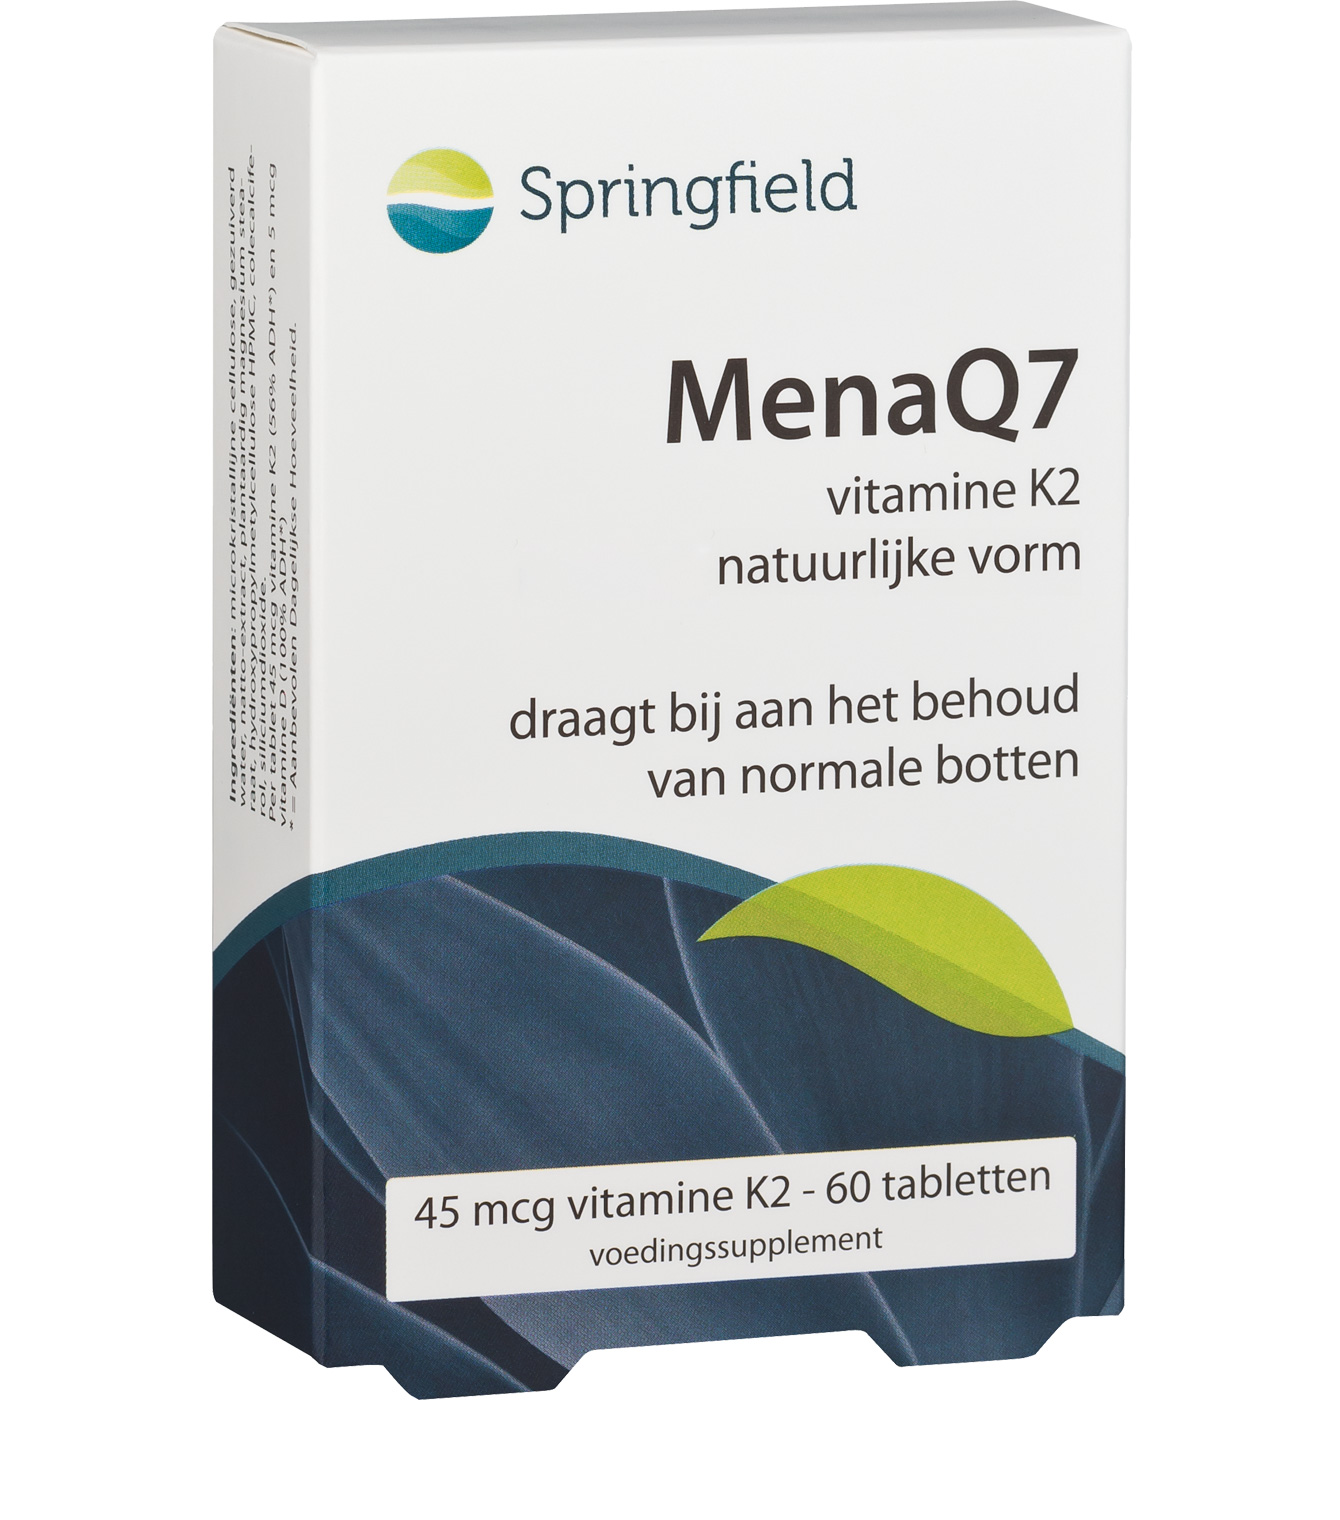 MenaQ7 vitamin K2 menaquinone-7 Springfield Nutraceuticals